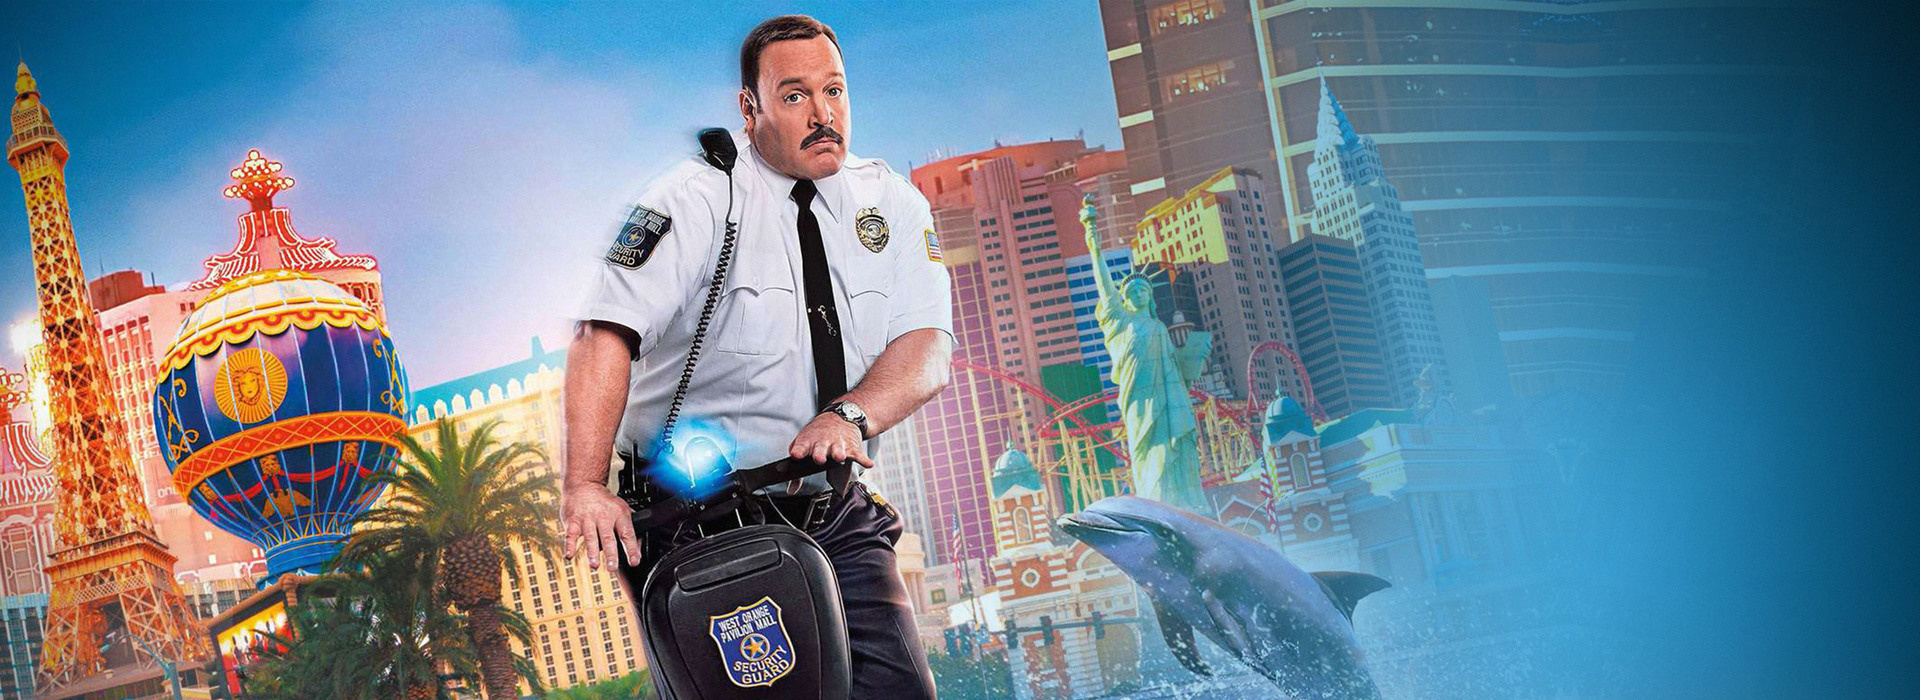 Movie poster Paul Blart: Mall Cop 2